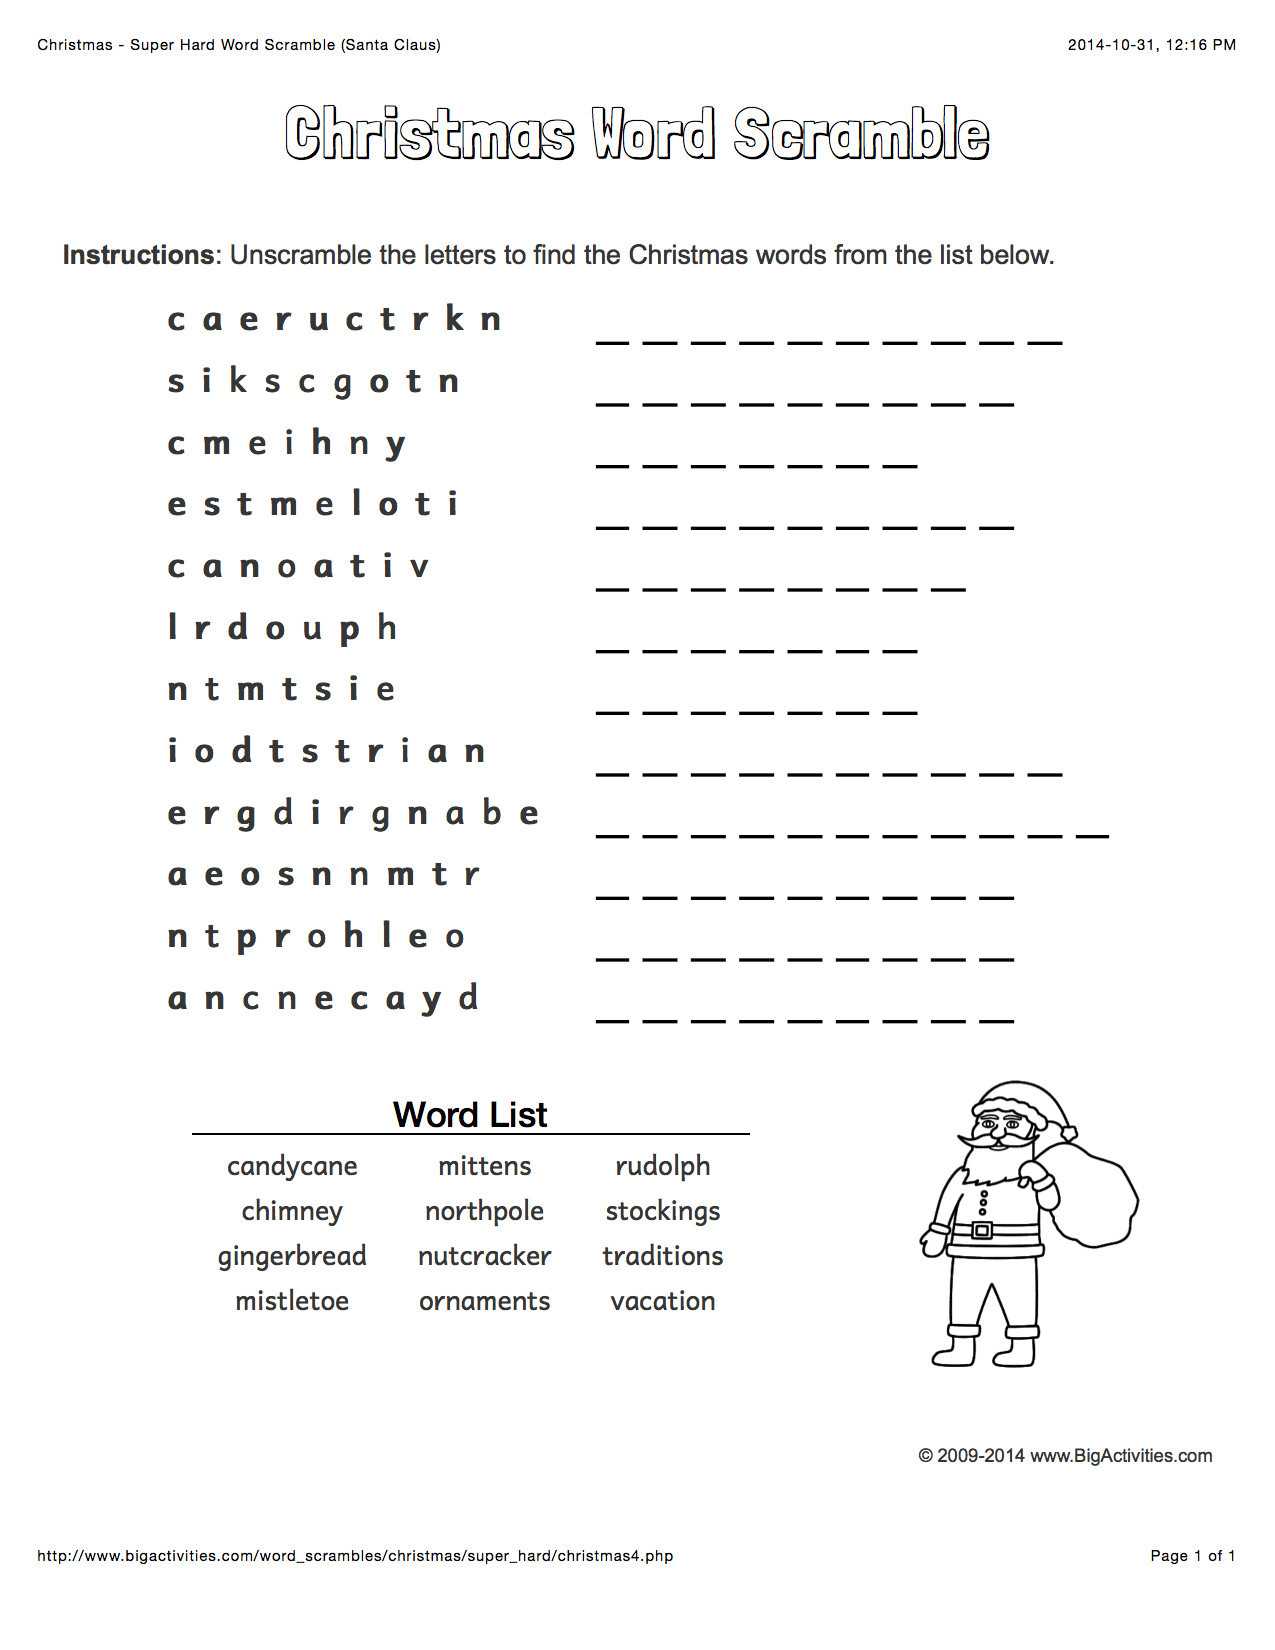 unscramble-sentences-6-english-esl-worksheets-pdf-doc